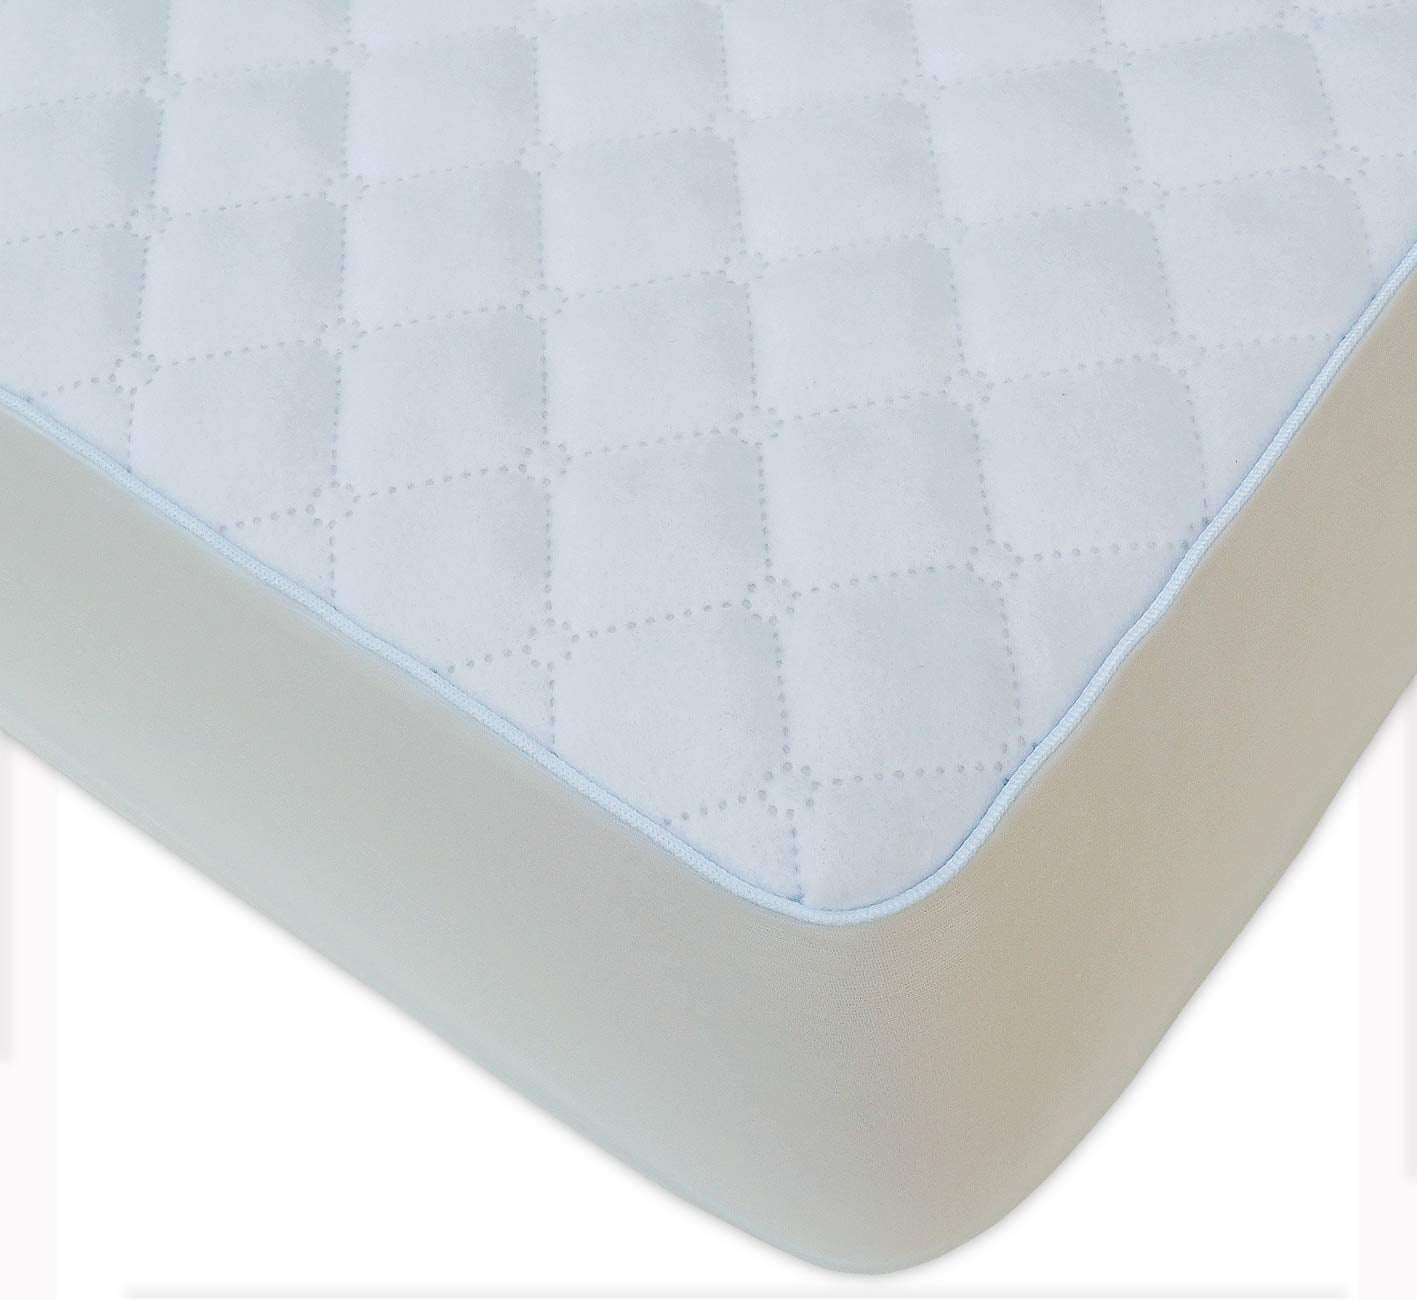 Bluesnail Super Soft Stretchy Fitted Crib Bed Sheet Standard Toddler Mattress 